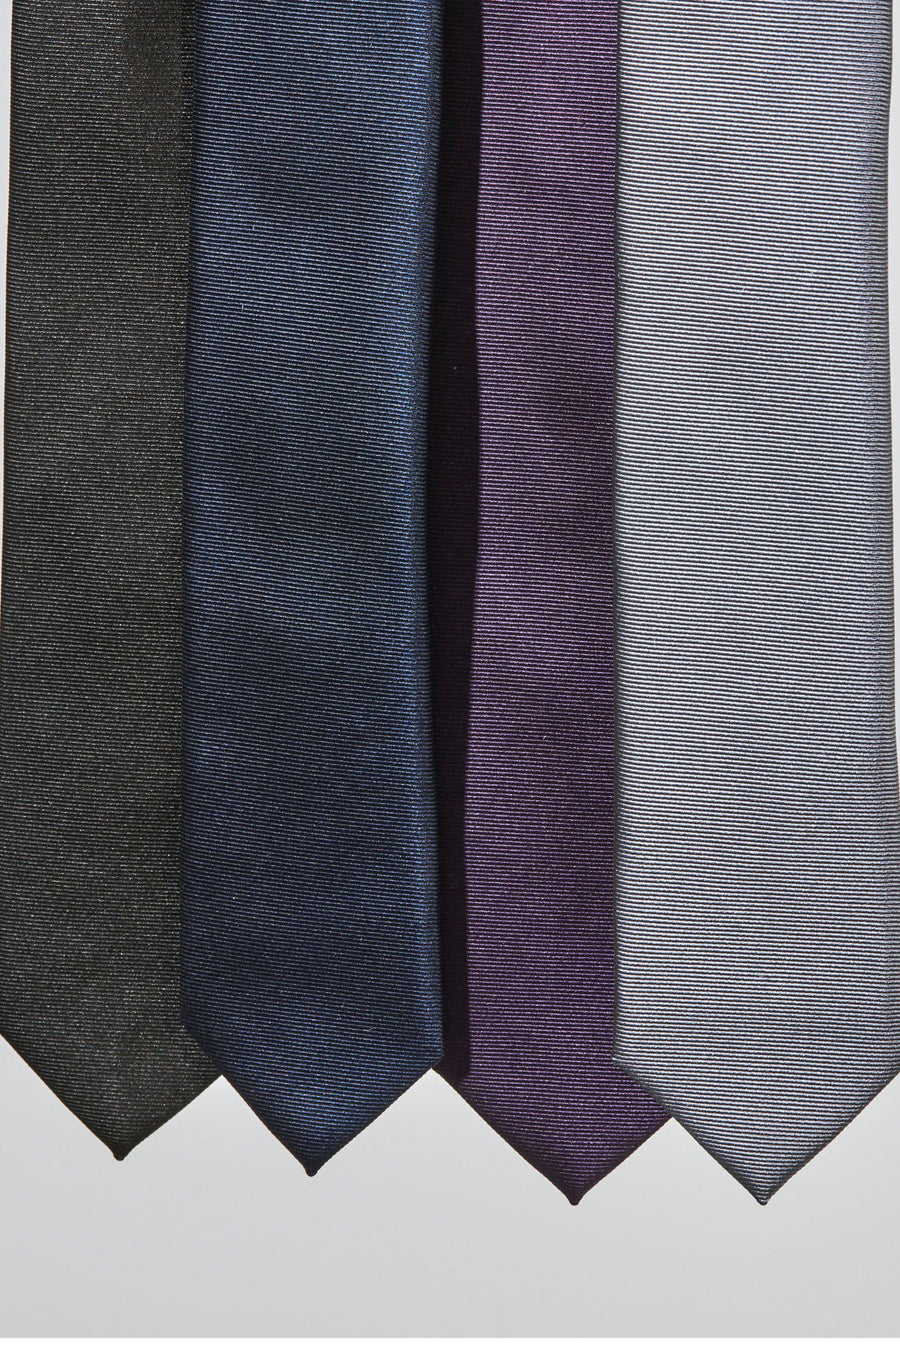 LITTLEBIG  Narrow Tie(Black or Navy)